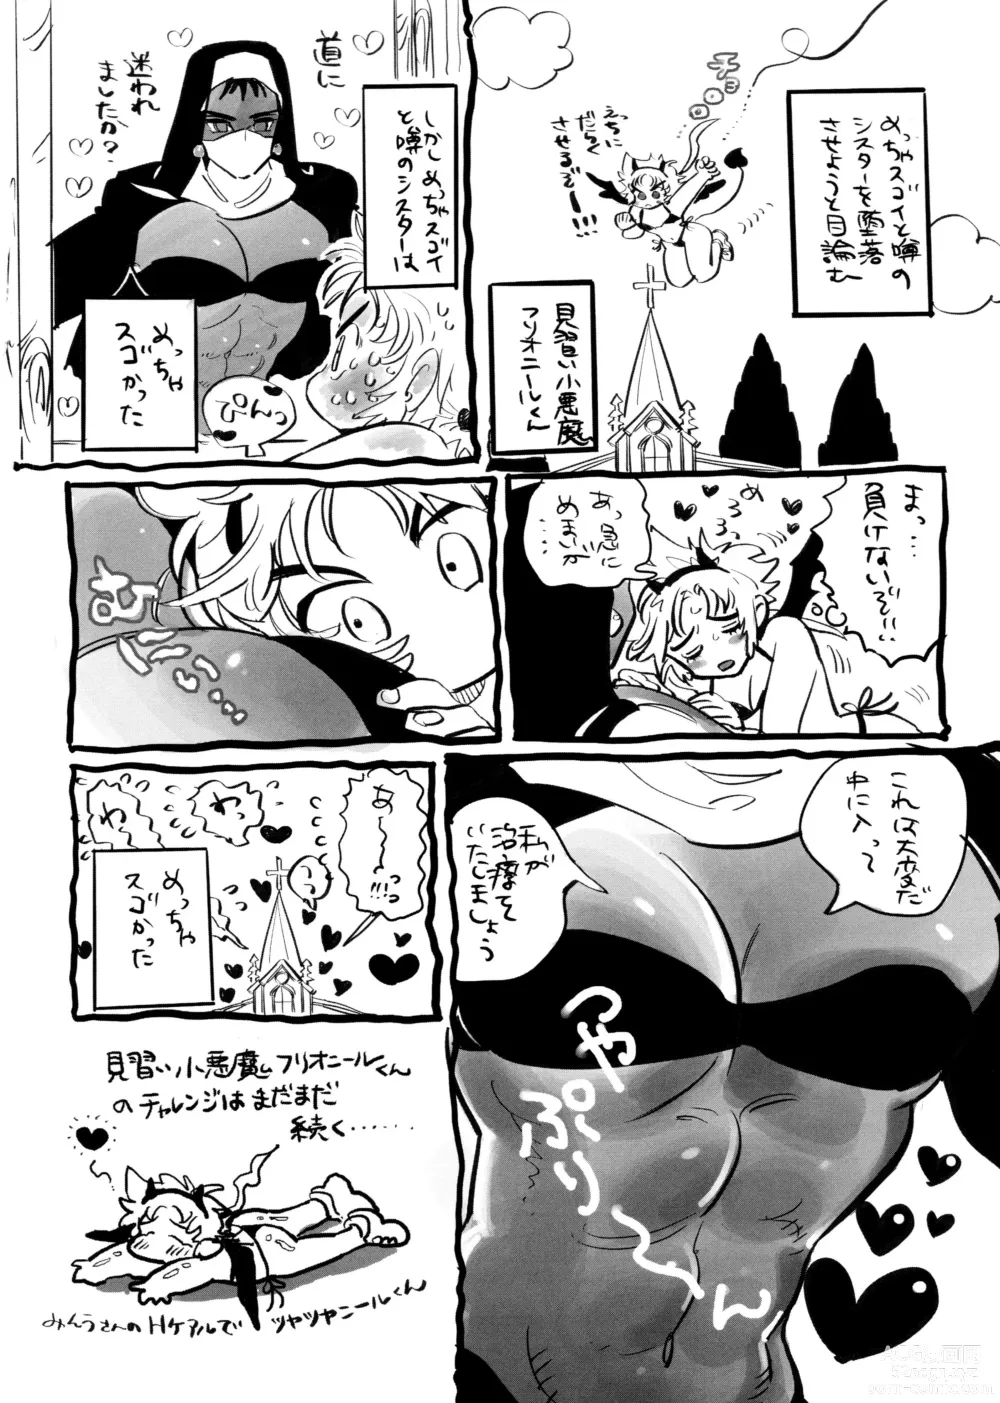 Page 26 of doujinshi Unmei no Karepi